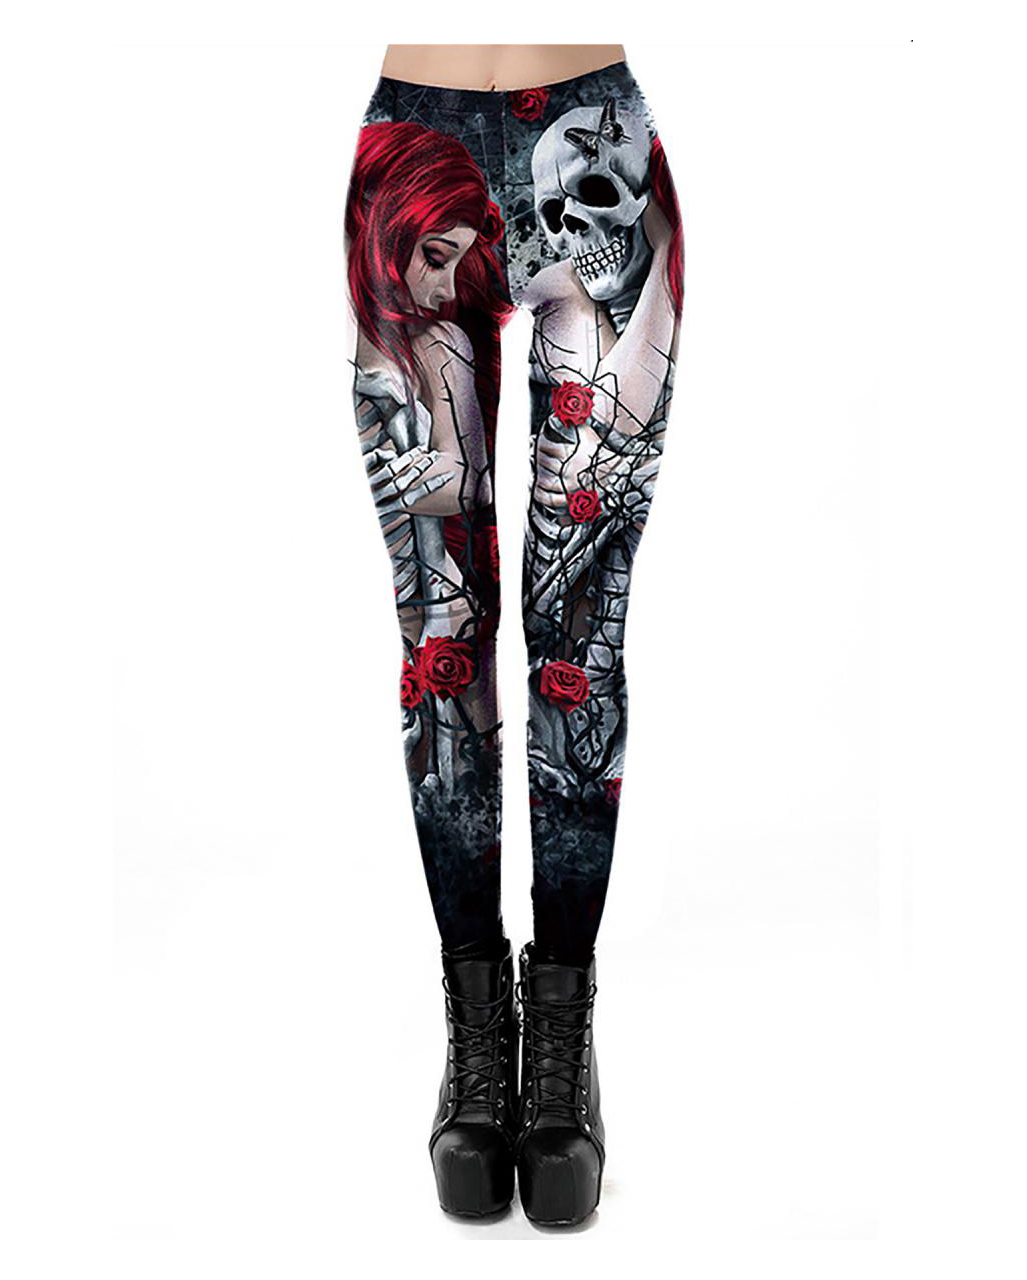 Black Punk Leggings with Skull Print